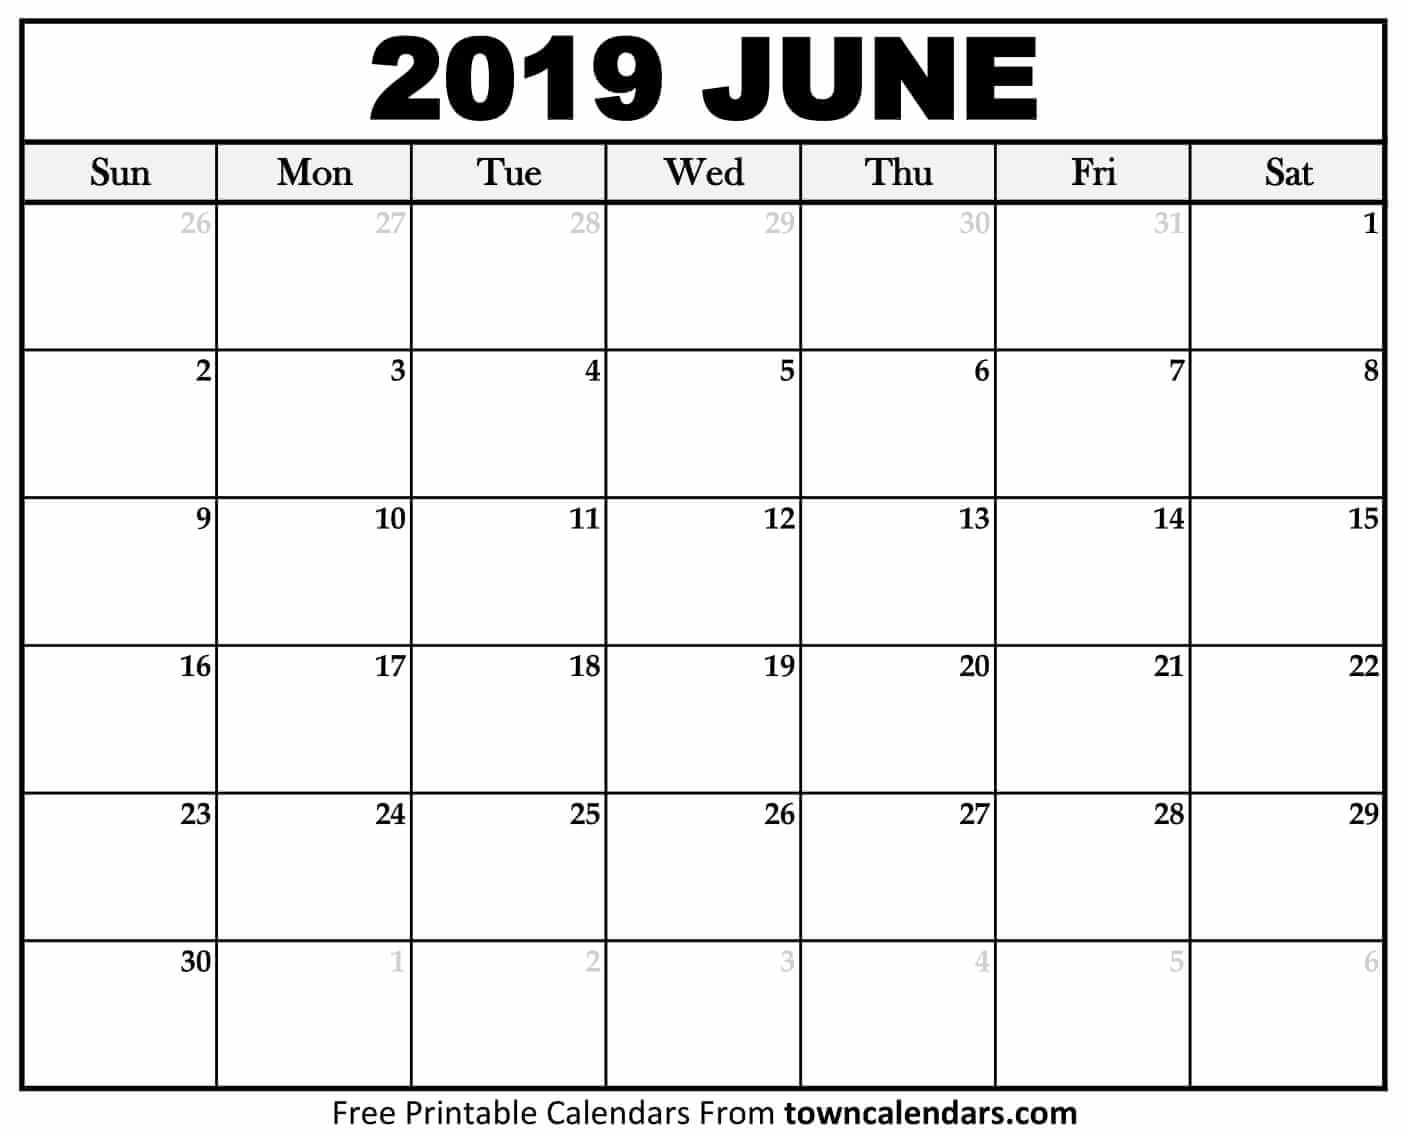 Printable towncalendars com . June Camping Calendar